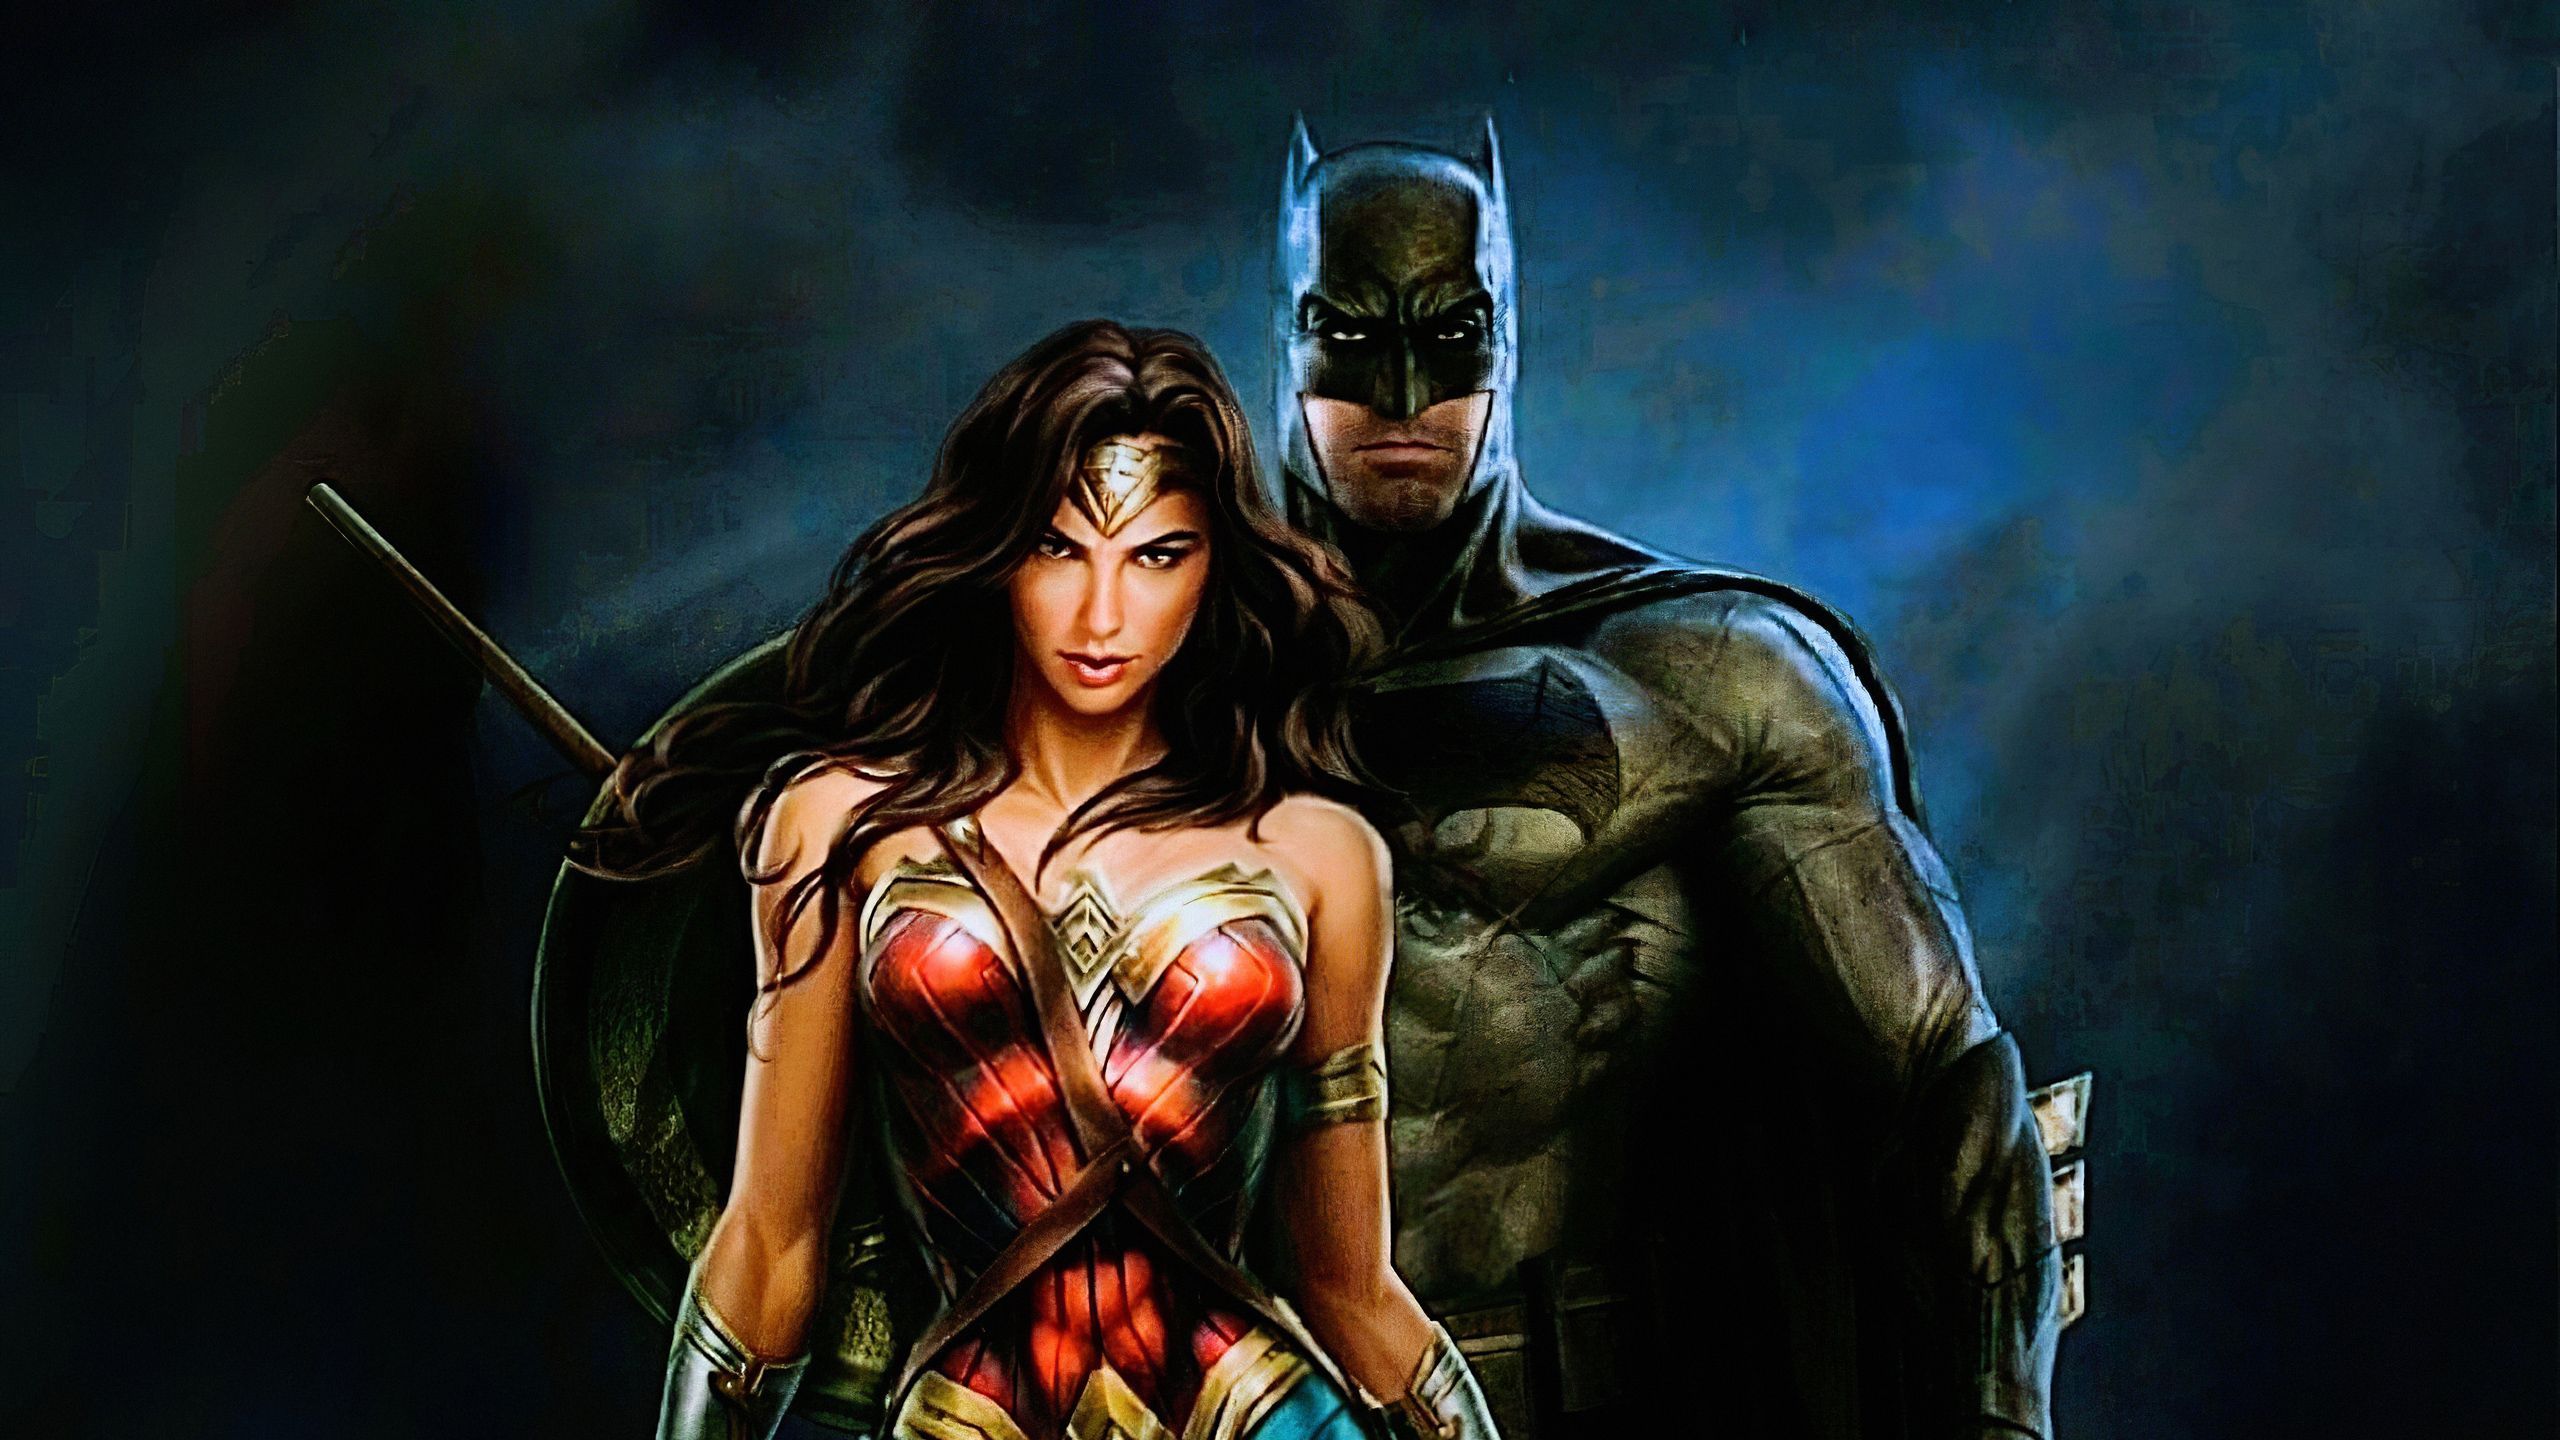 Batman and Wonder Woman Wallpaper Free Batman and Wonder Woman Background